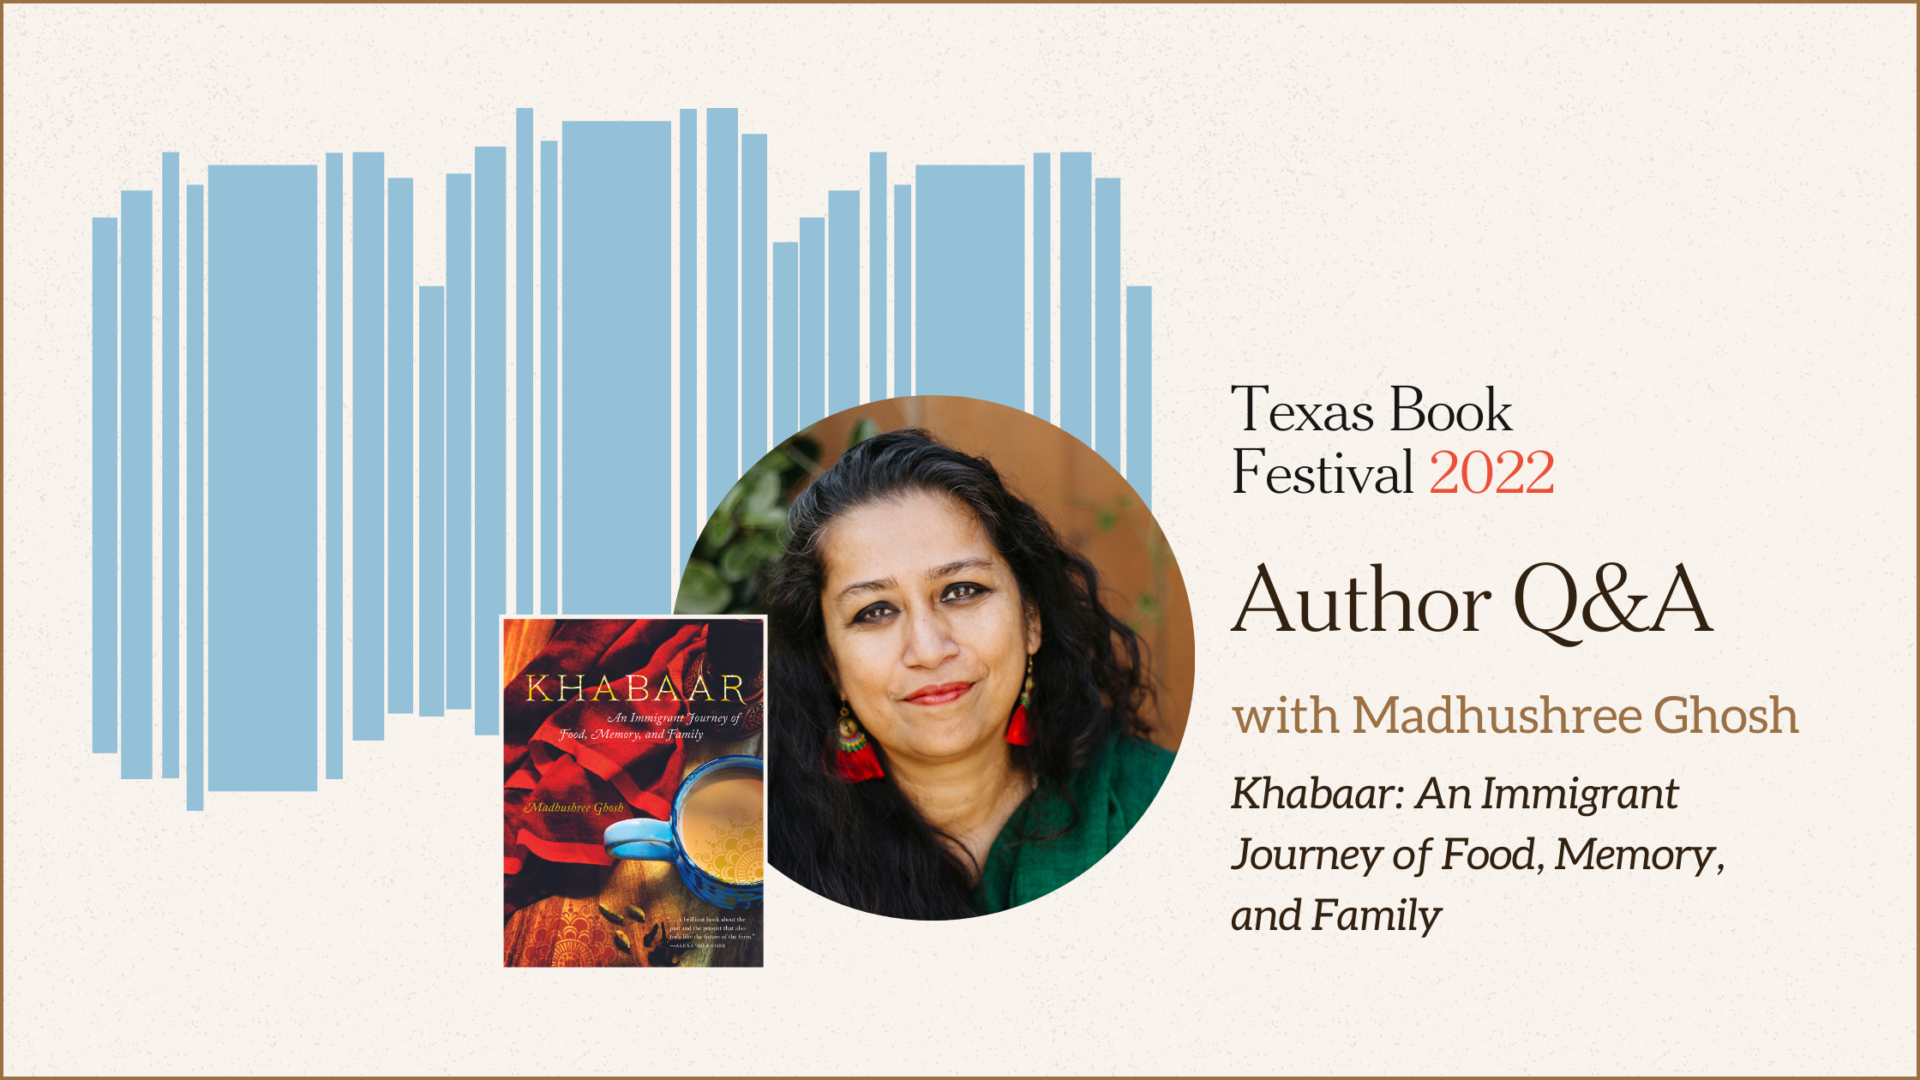 TBF Author Q&A with Madhushree Ghosh